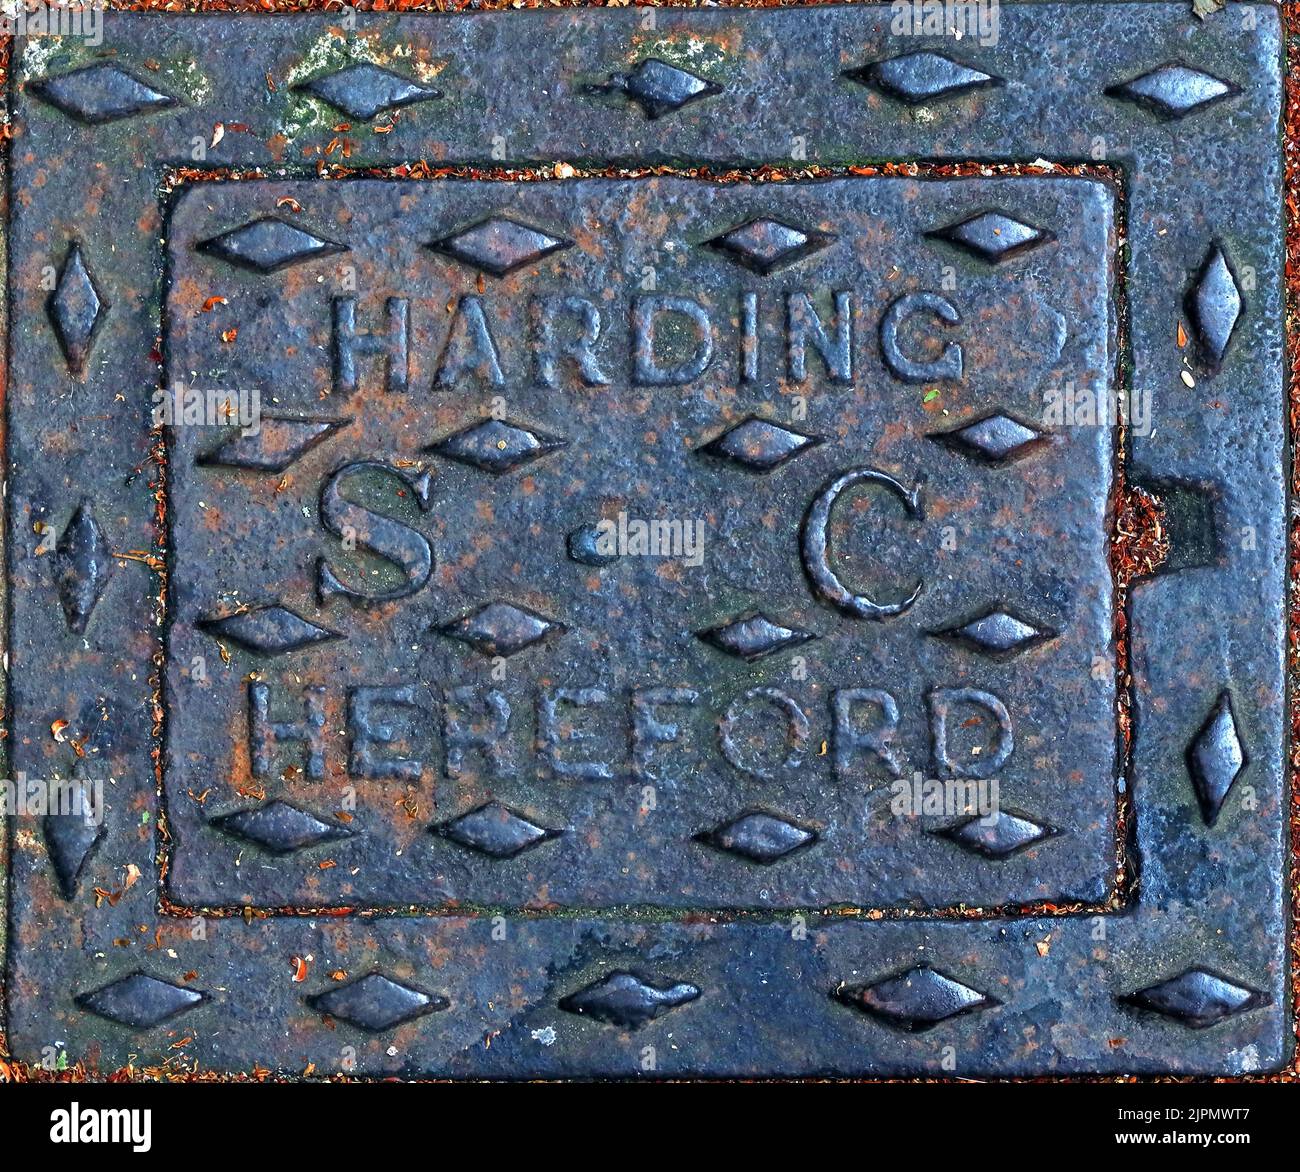 Harding Hereford grille en fonte gaufrée, drain d'égout, Castle Street, Hereford, Angleterre, ROYAUME-UNI, HR1 2NL Banque D'Images